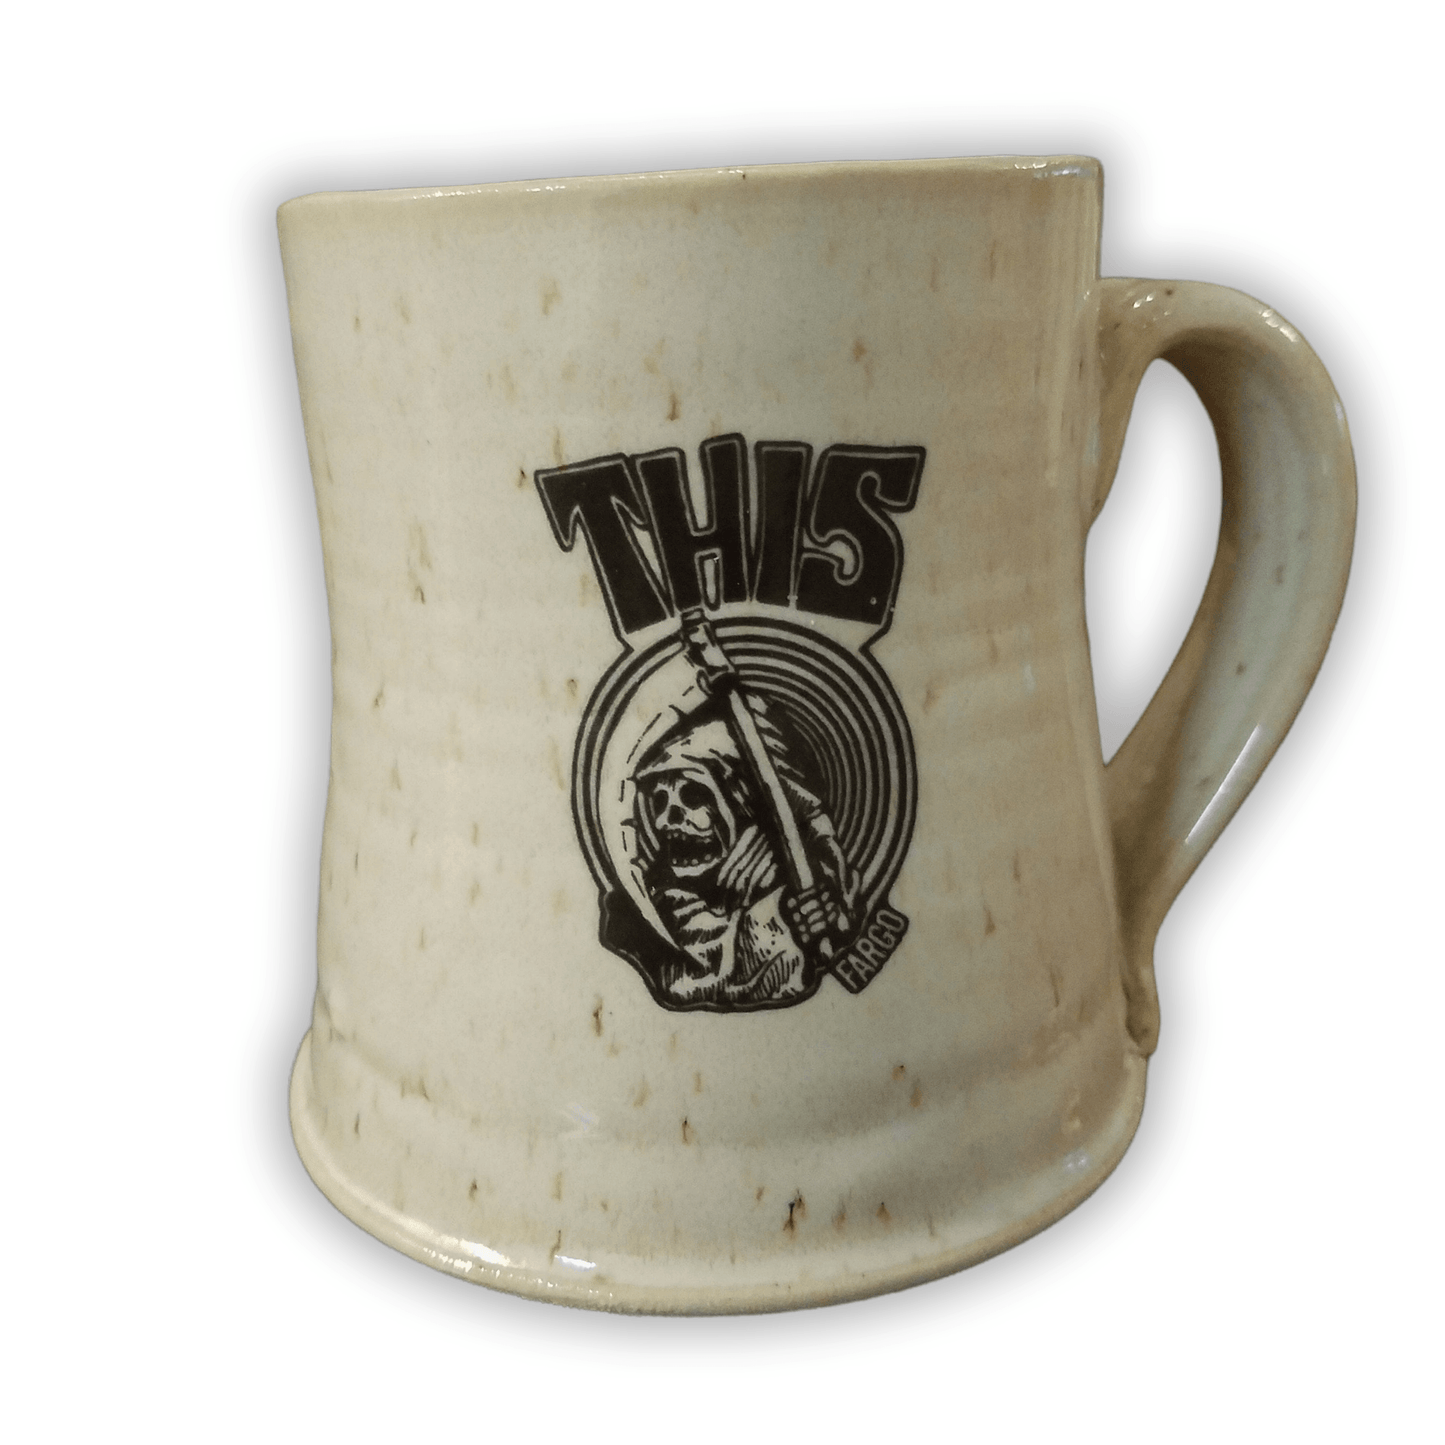 THIS Mug | Handmade By Hayden Swanson